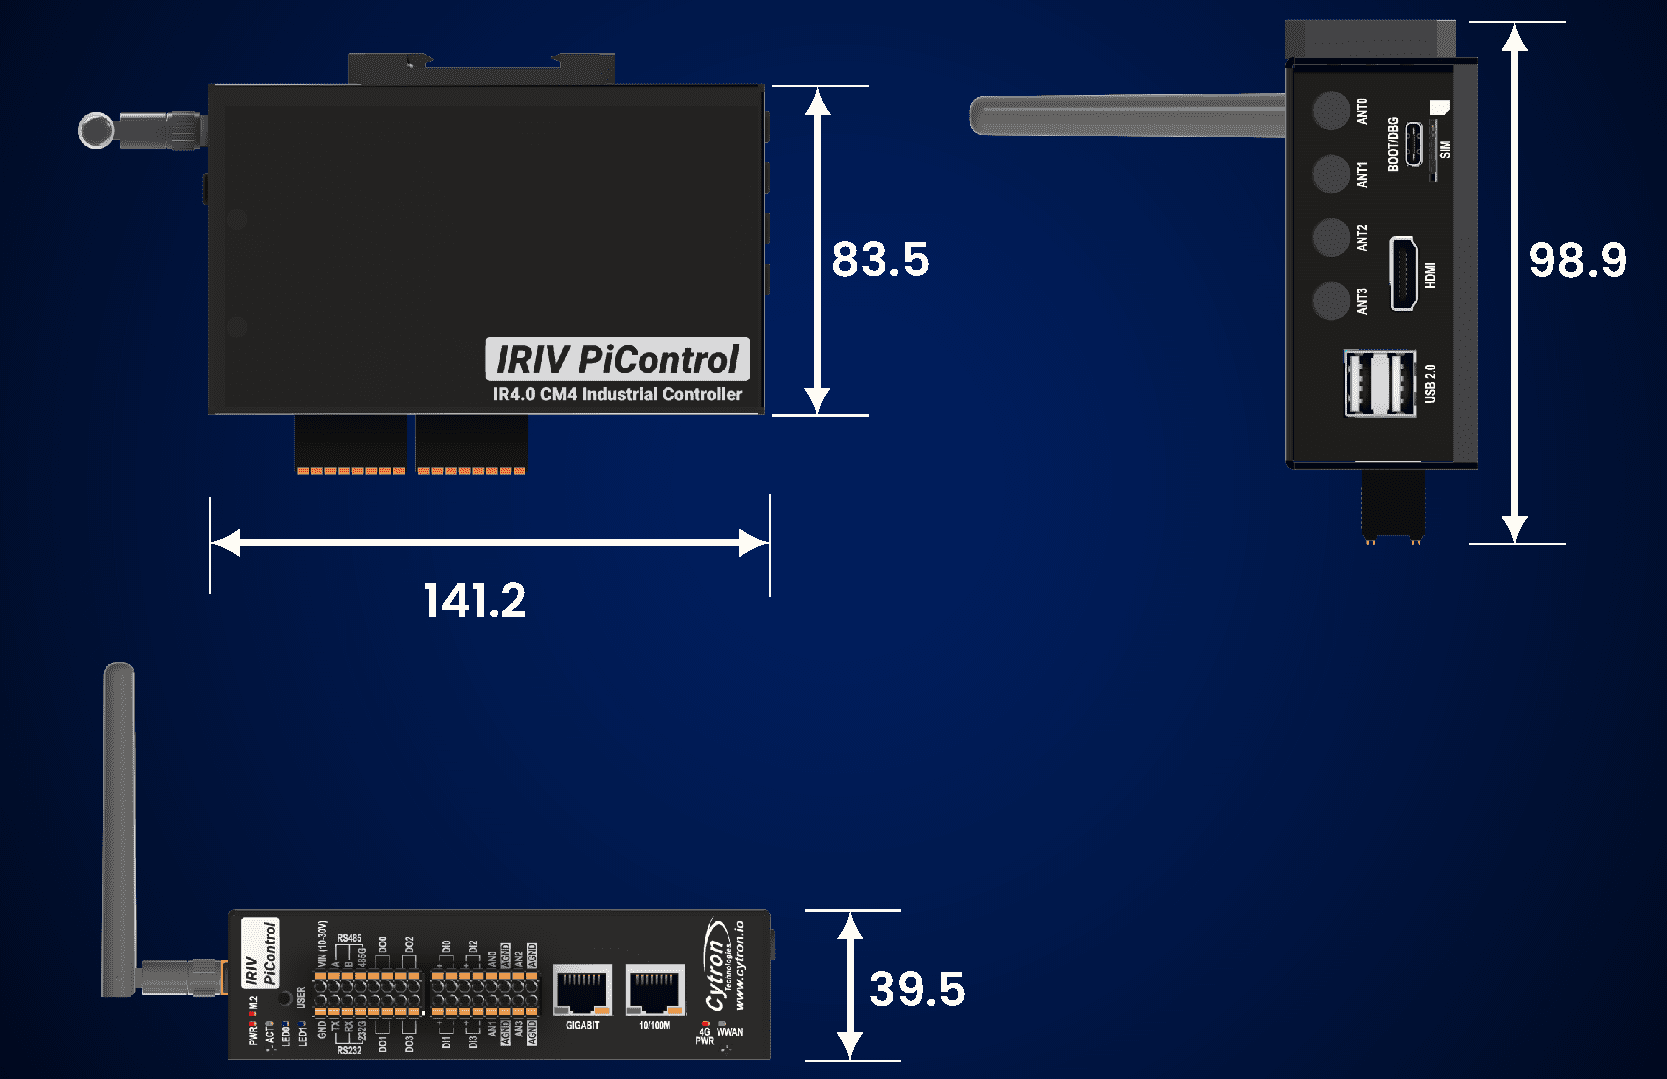 IRIV PiControl - Contrôleur Industriel IR4.0 CM4 avec Wireless 2 GB RAM 16 GB eMMC